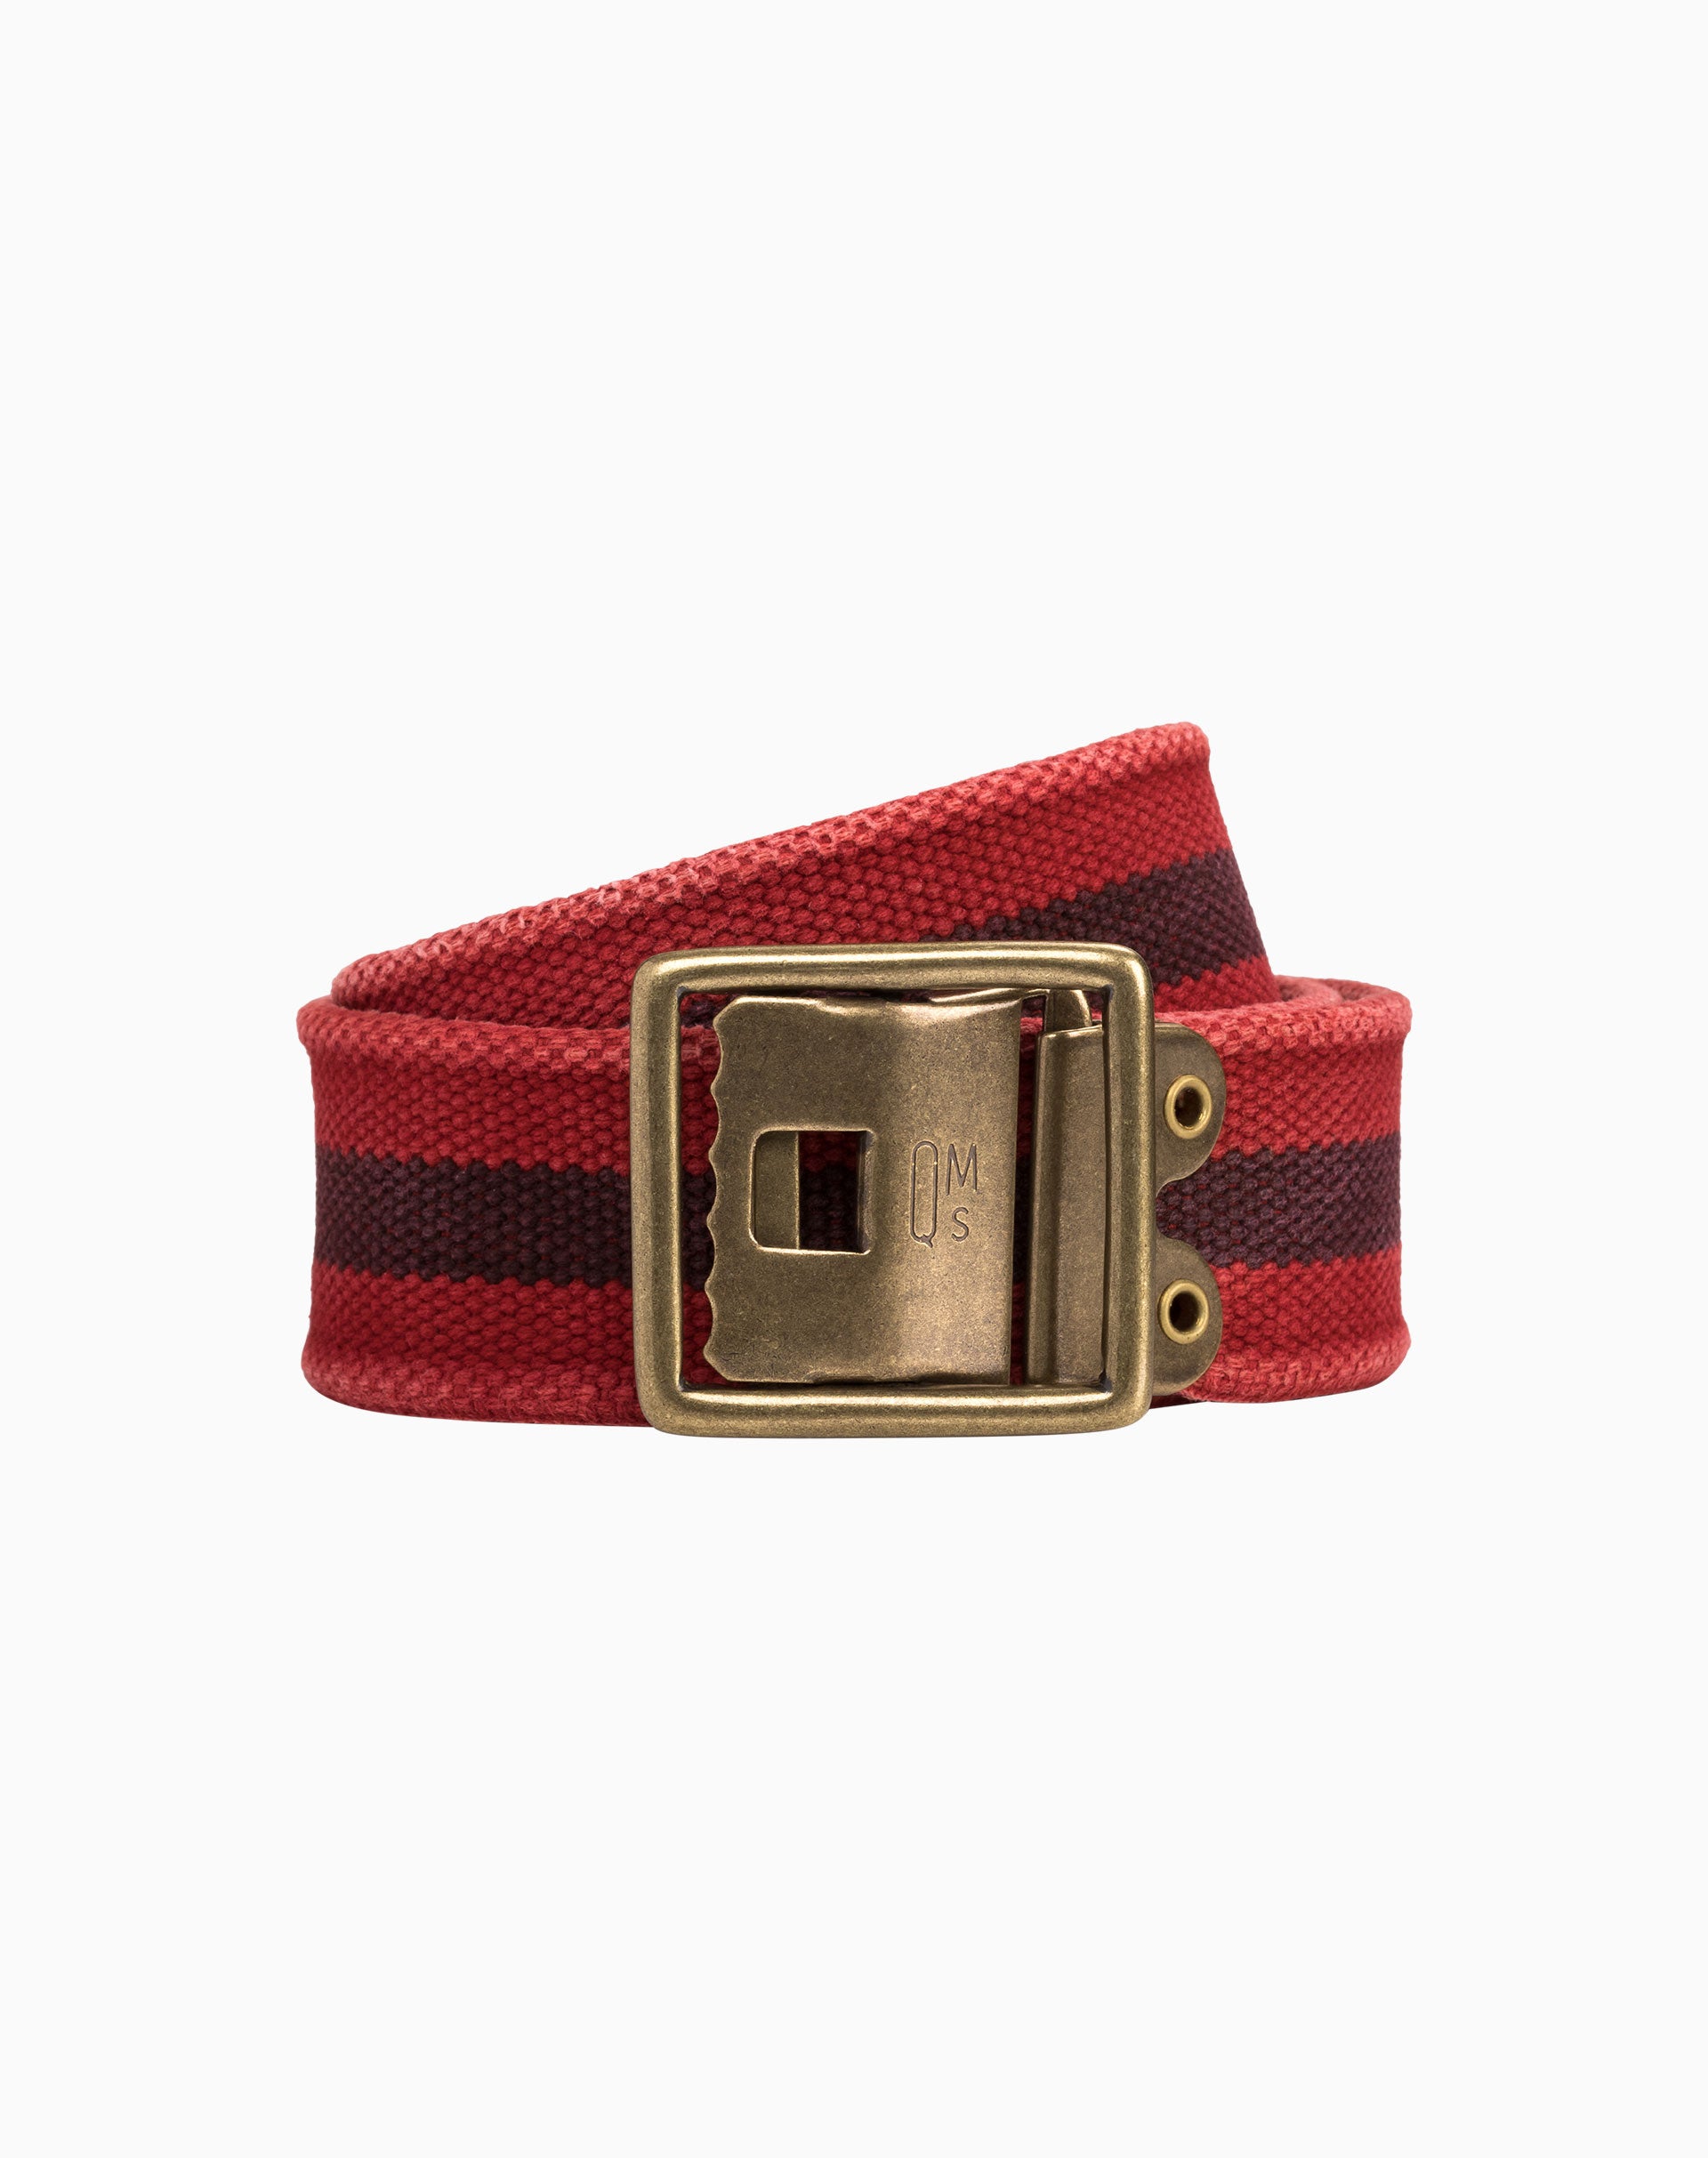 Surcingle Belt With Military Brass Buckle – Khaki/Navy